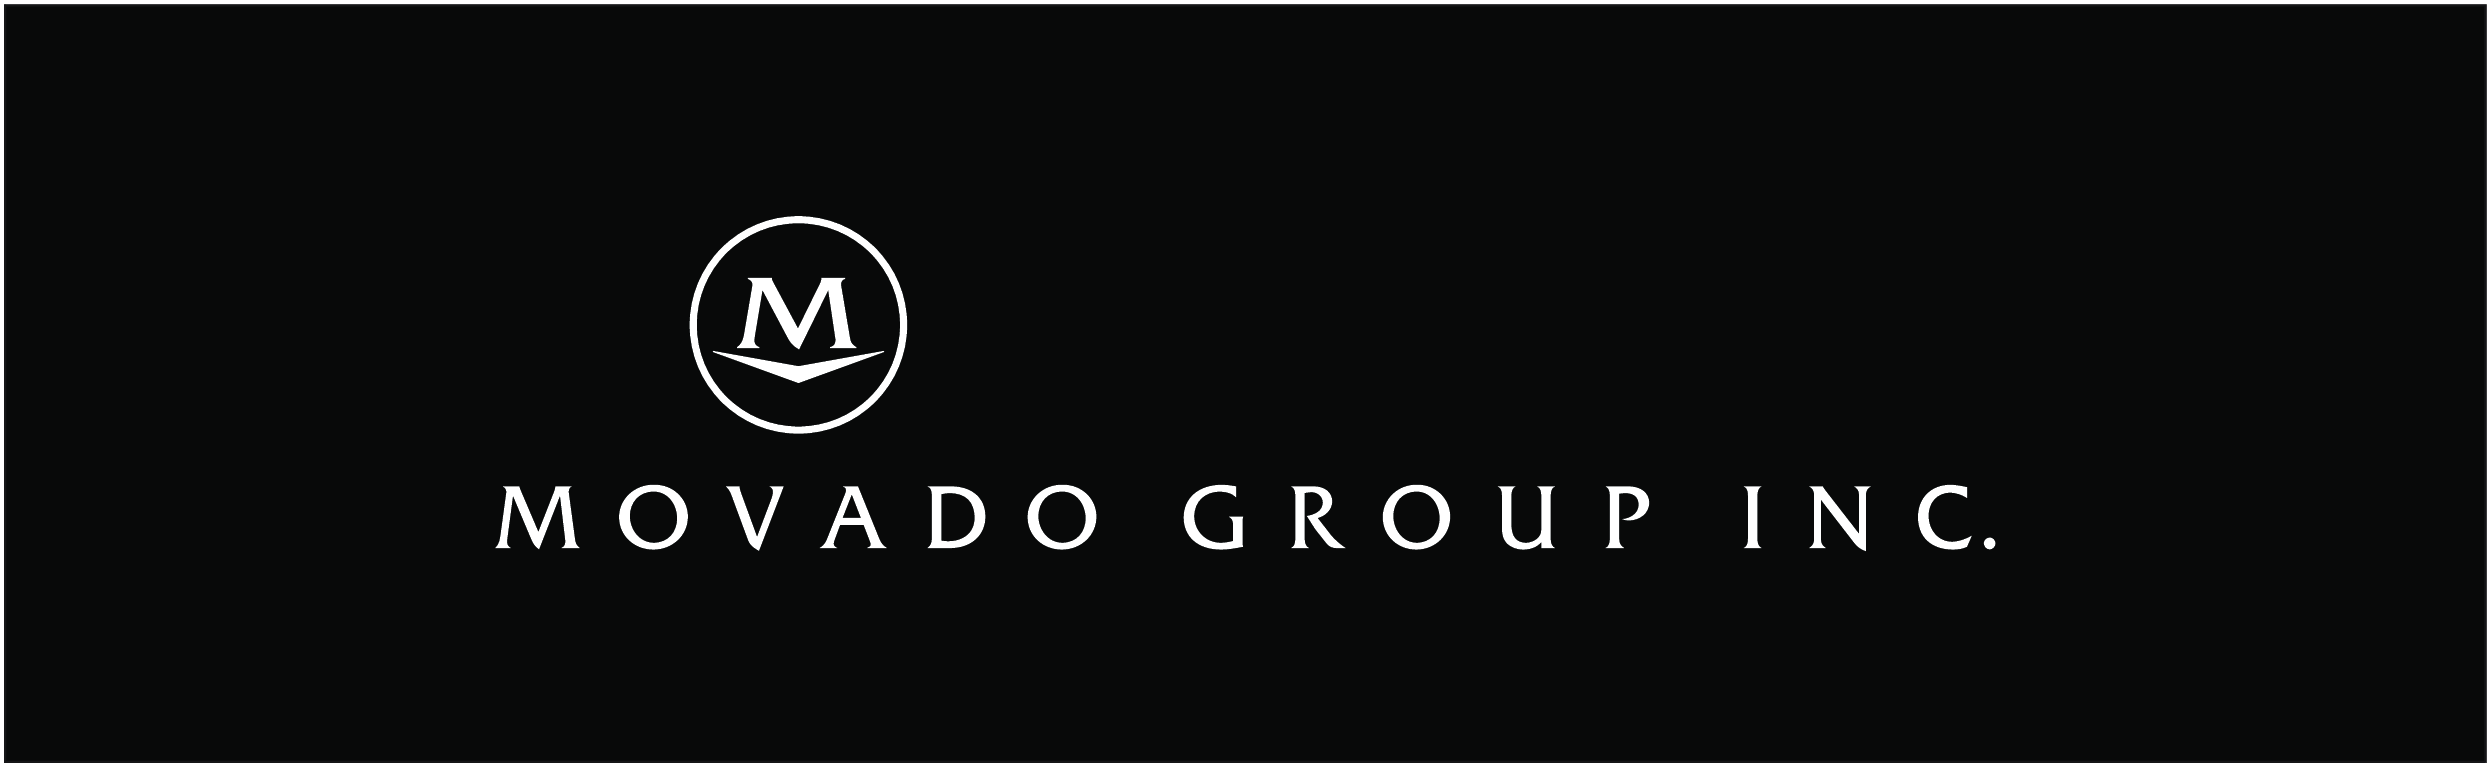 Movado Group INc